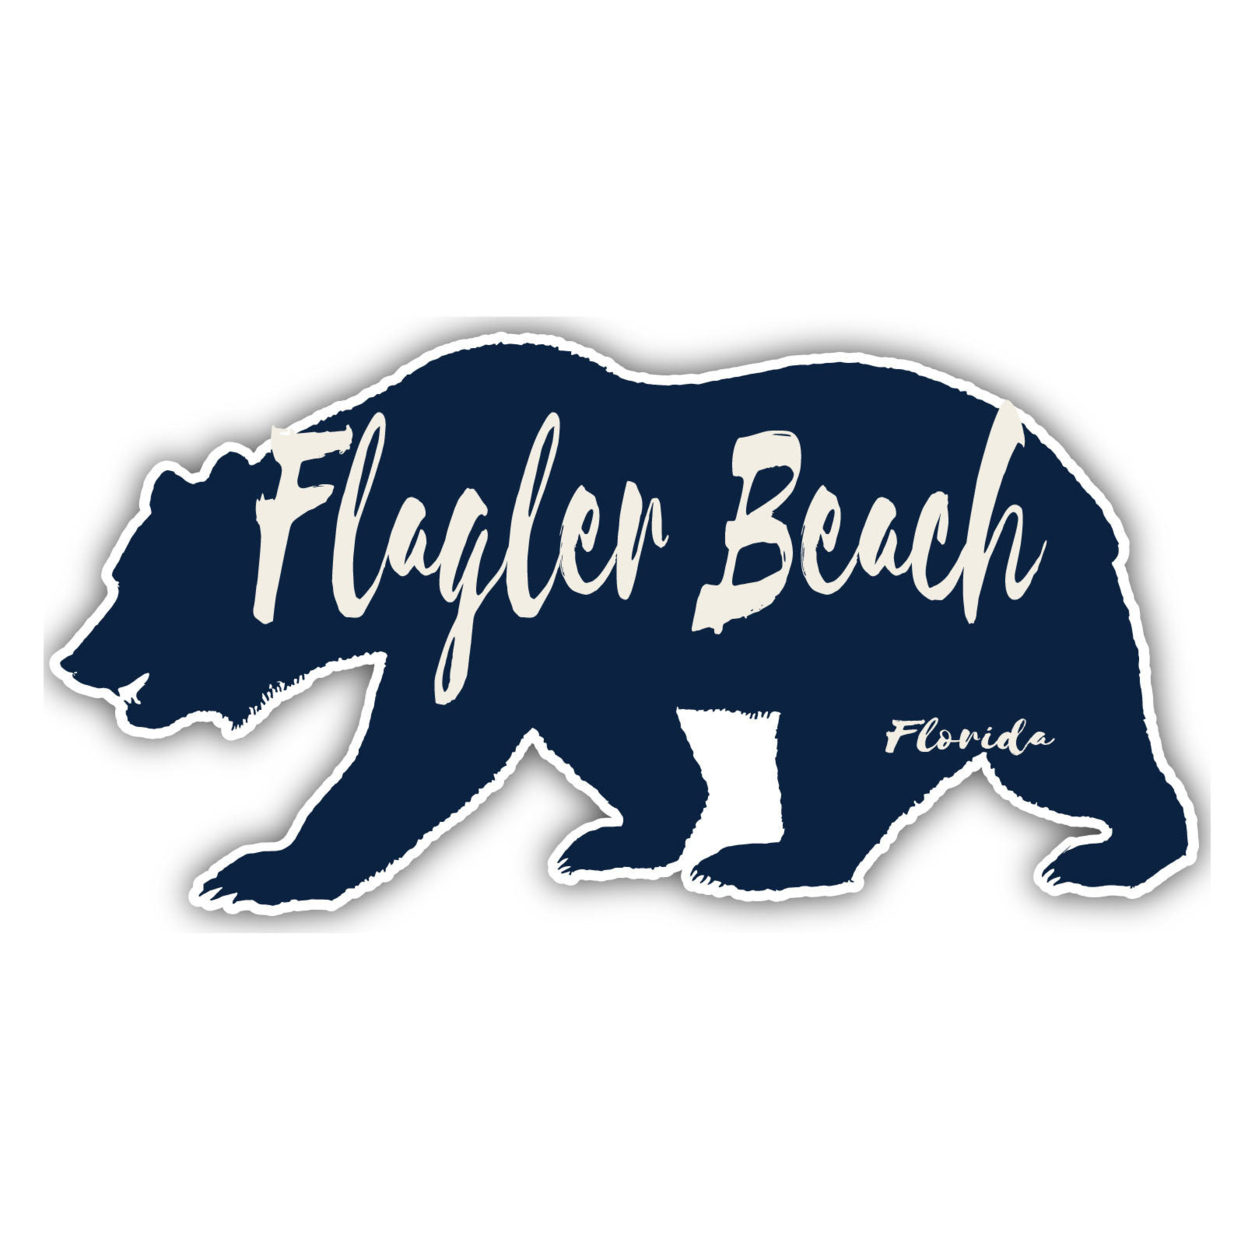 Flagler Beach Florida Souvenir Decorative Stickers (Choose Theme And Size) - Single Unit, 4-Inch, Camp Life